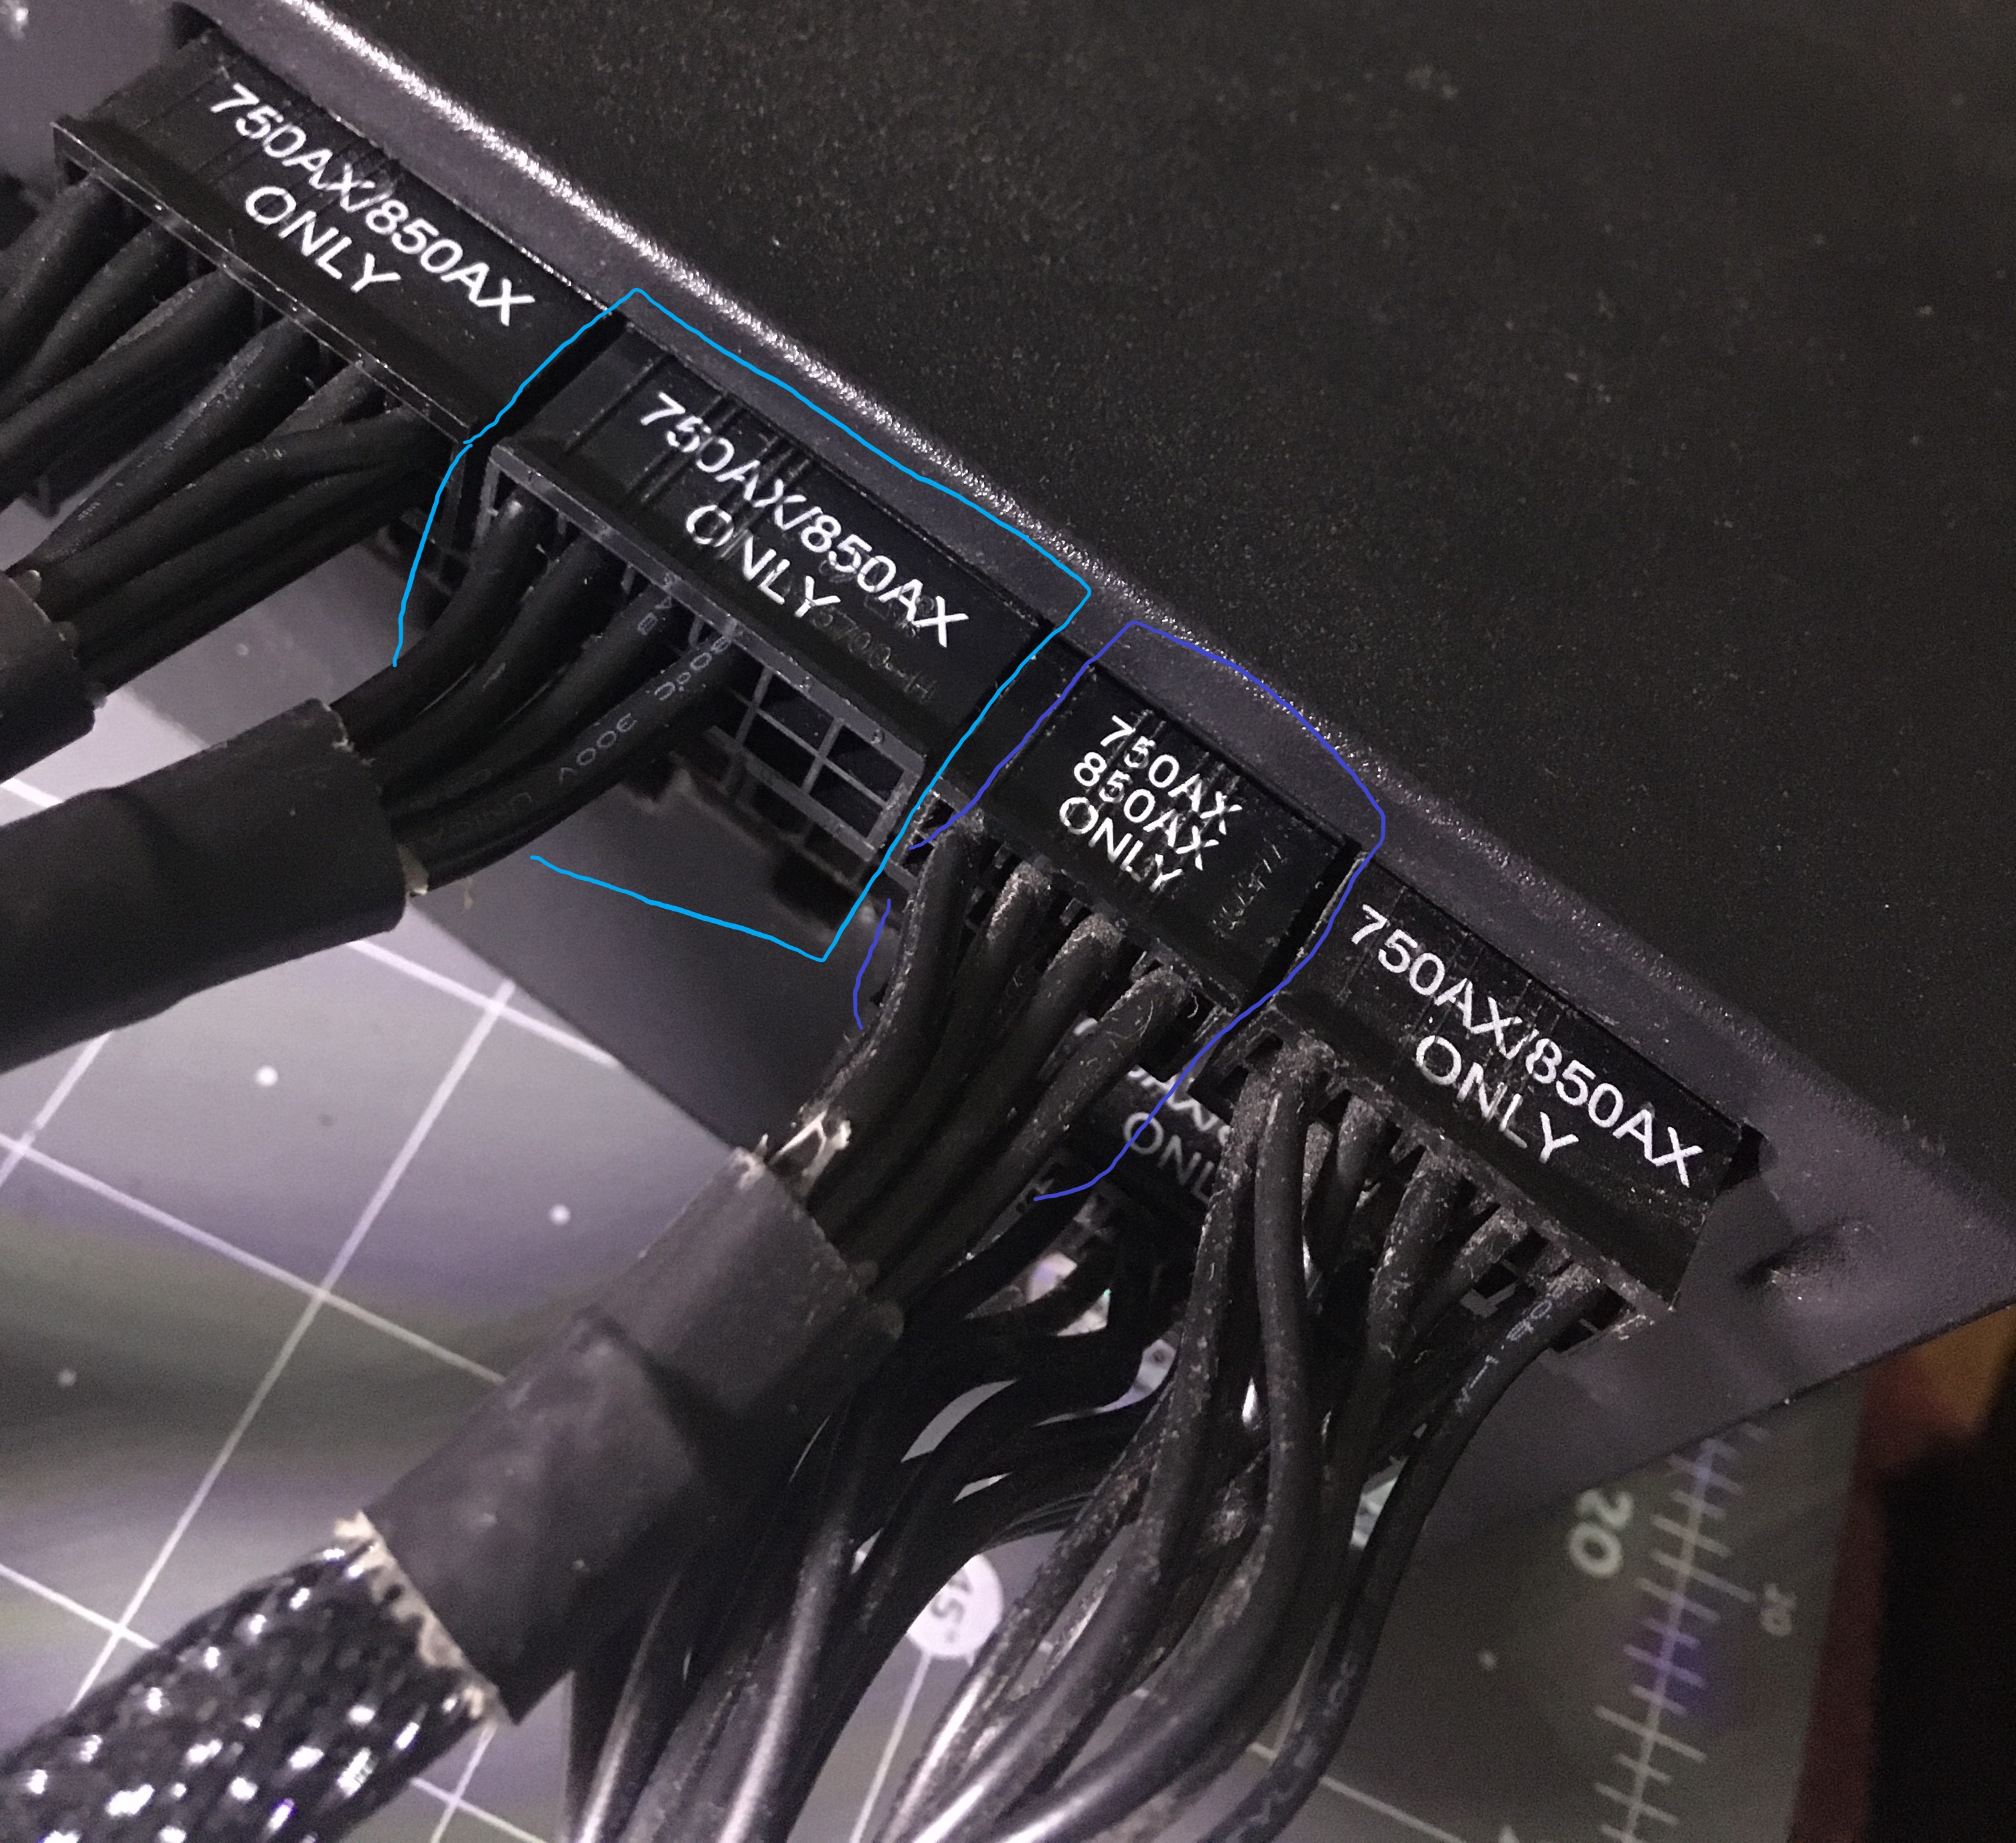 Corsair AX750 2 12V 8-pin cables? - Power Supplies - Linus Tech Tips